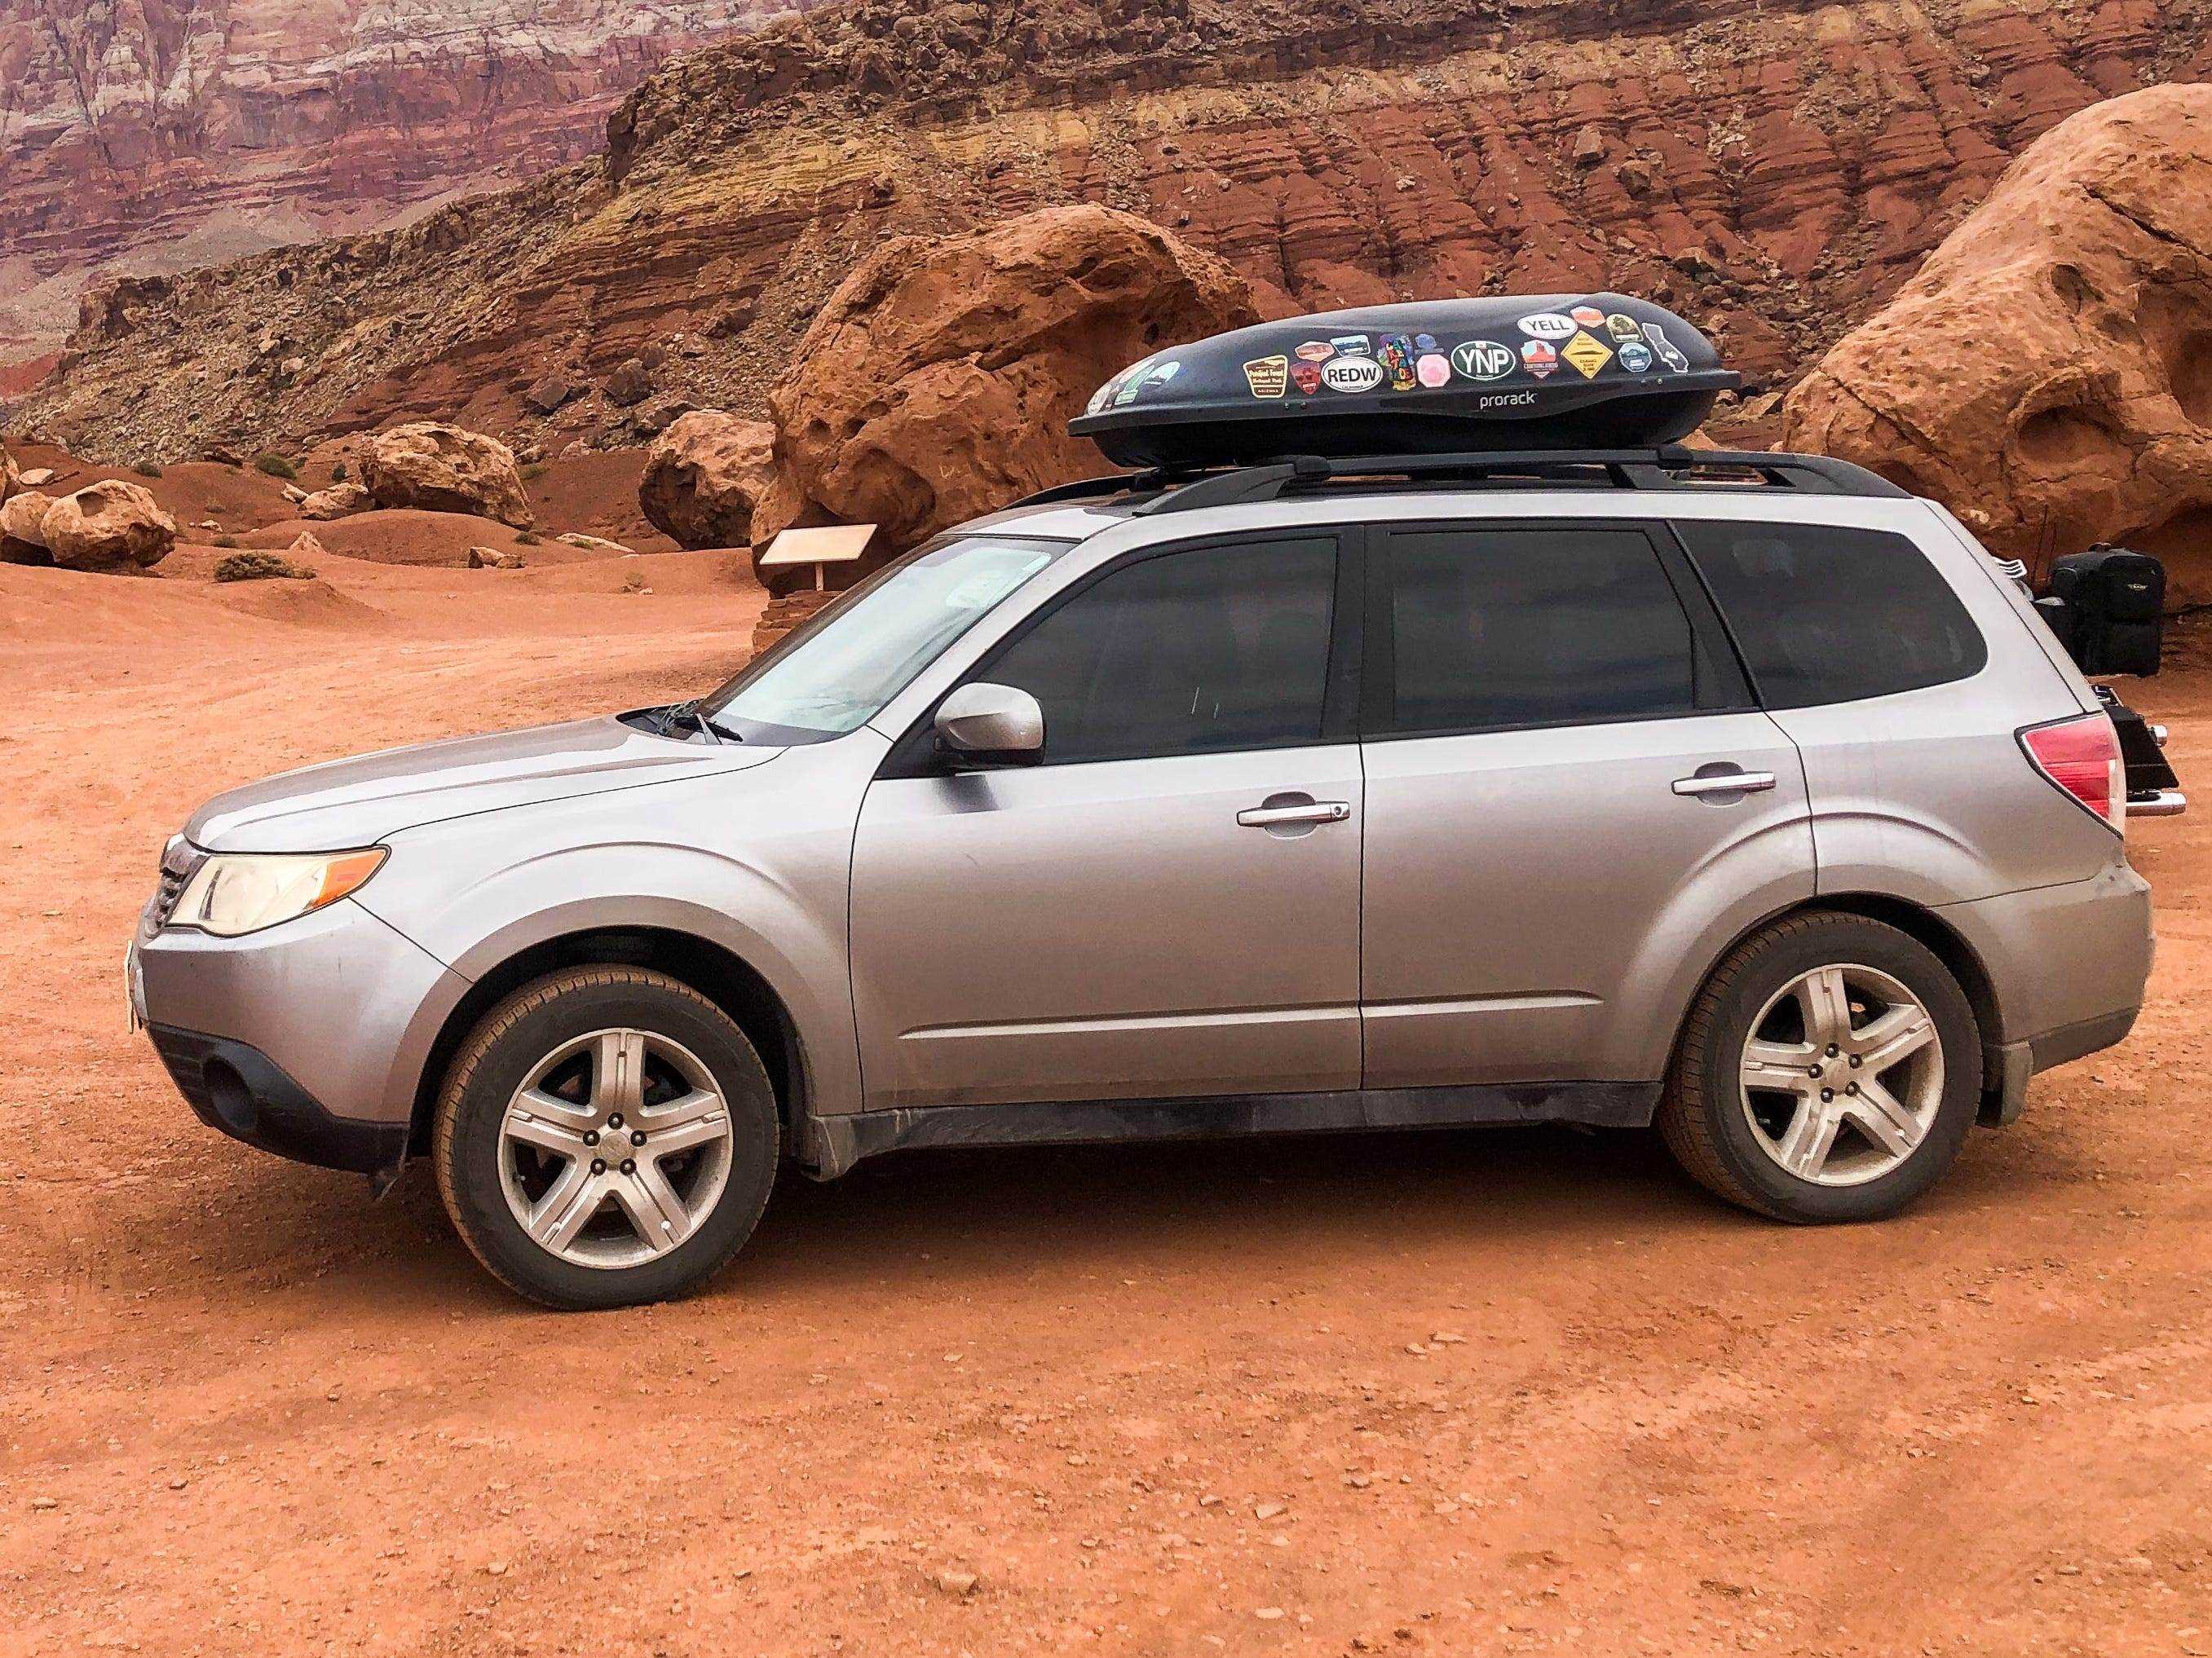 Subaru Förster in der Wüste geparkt Nicole Jordan